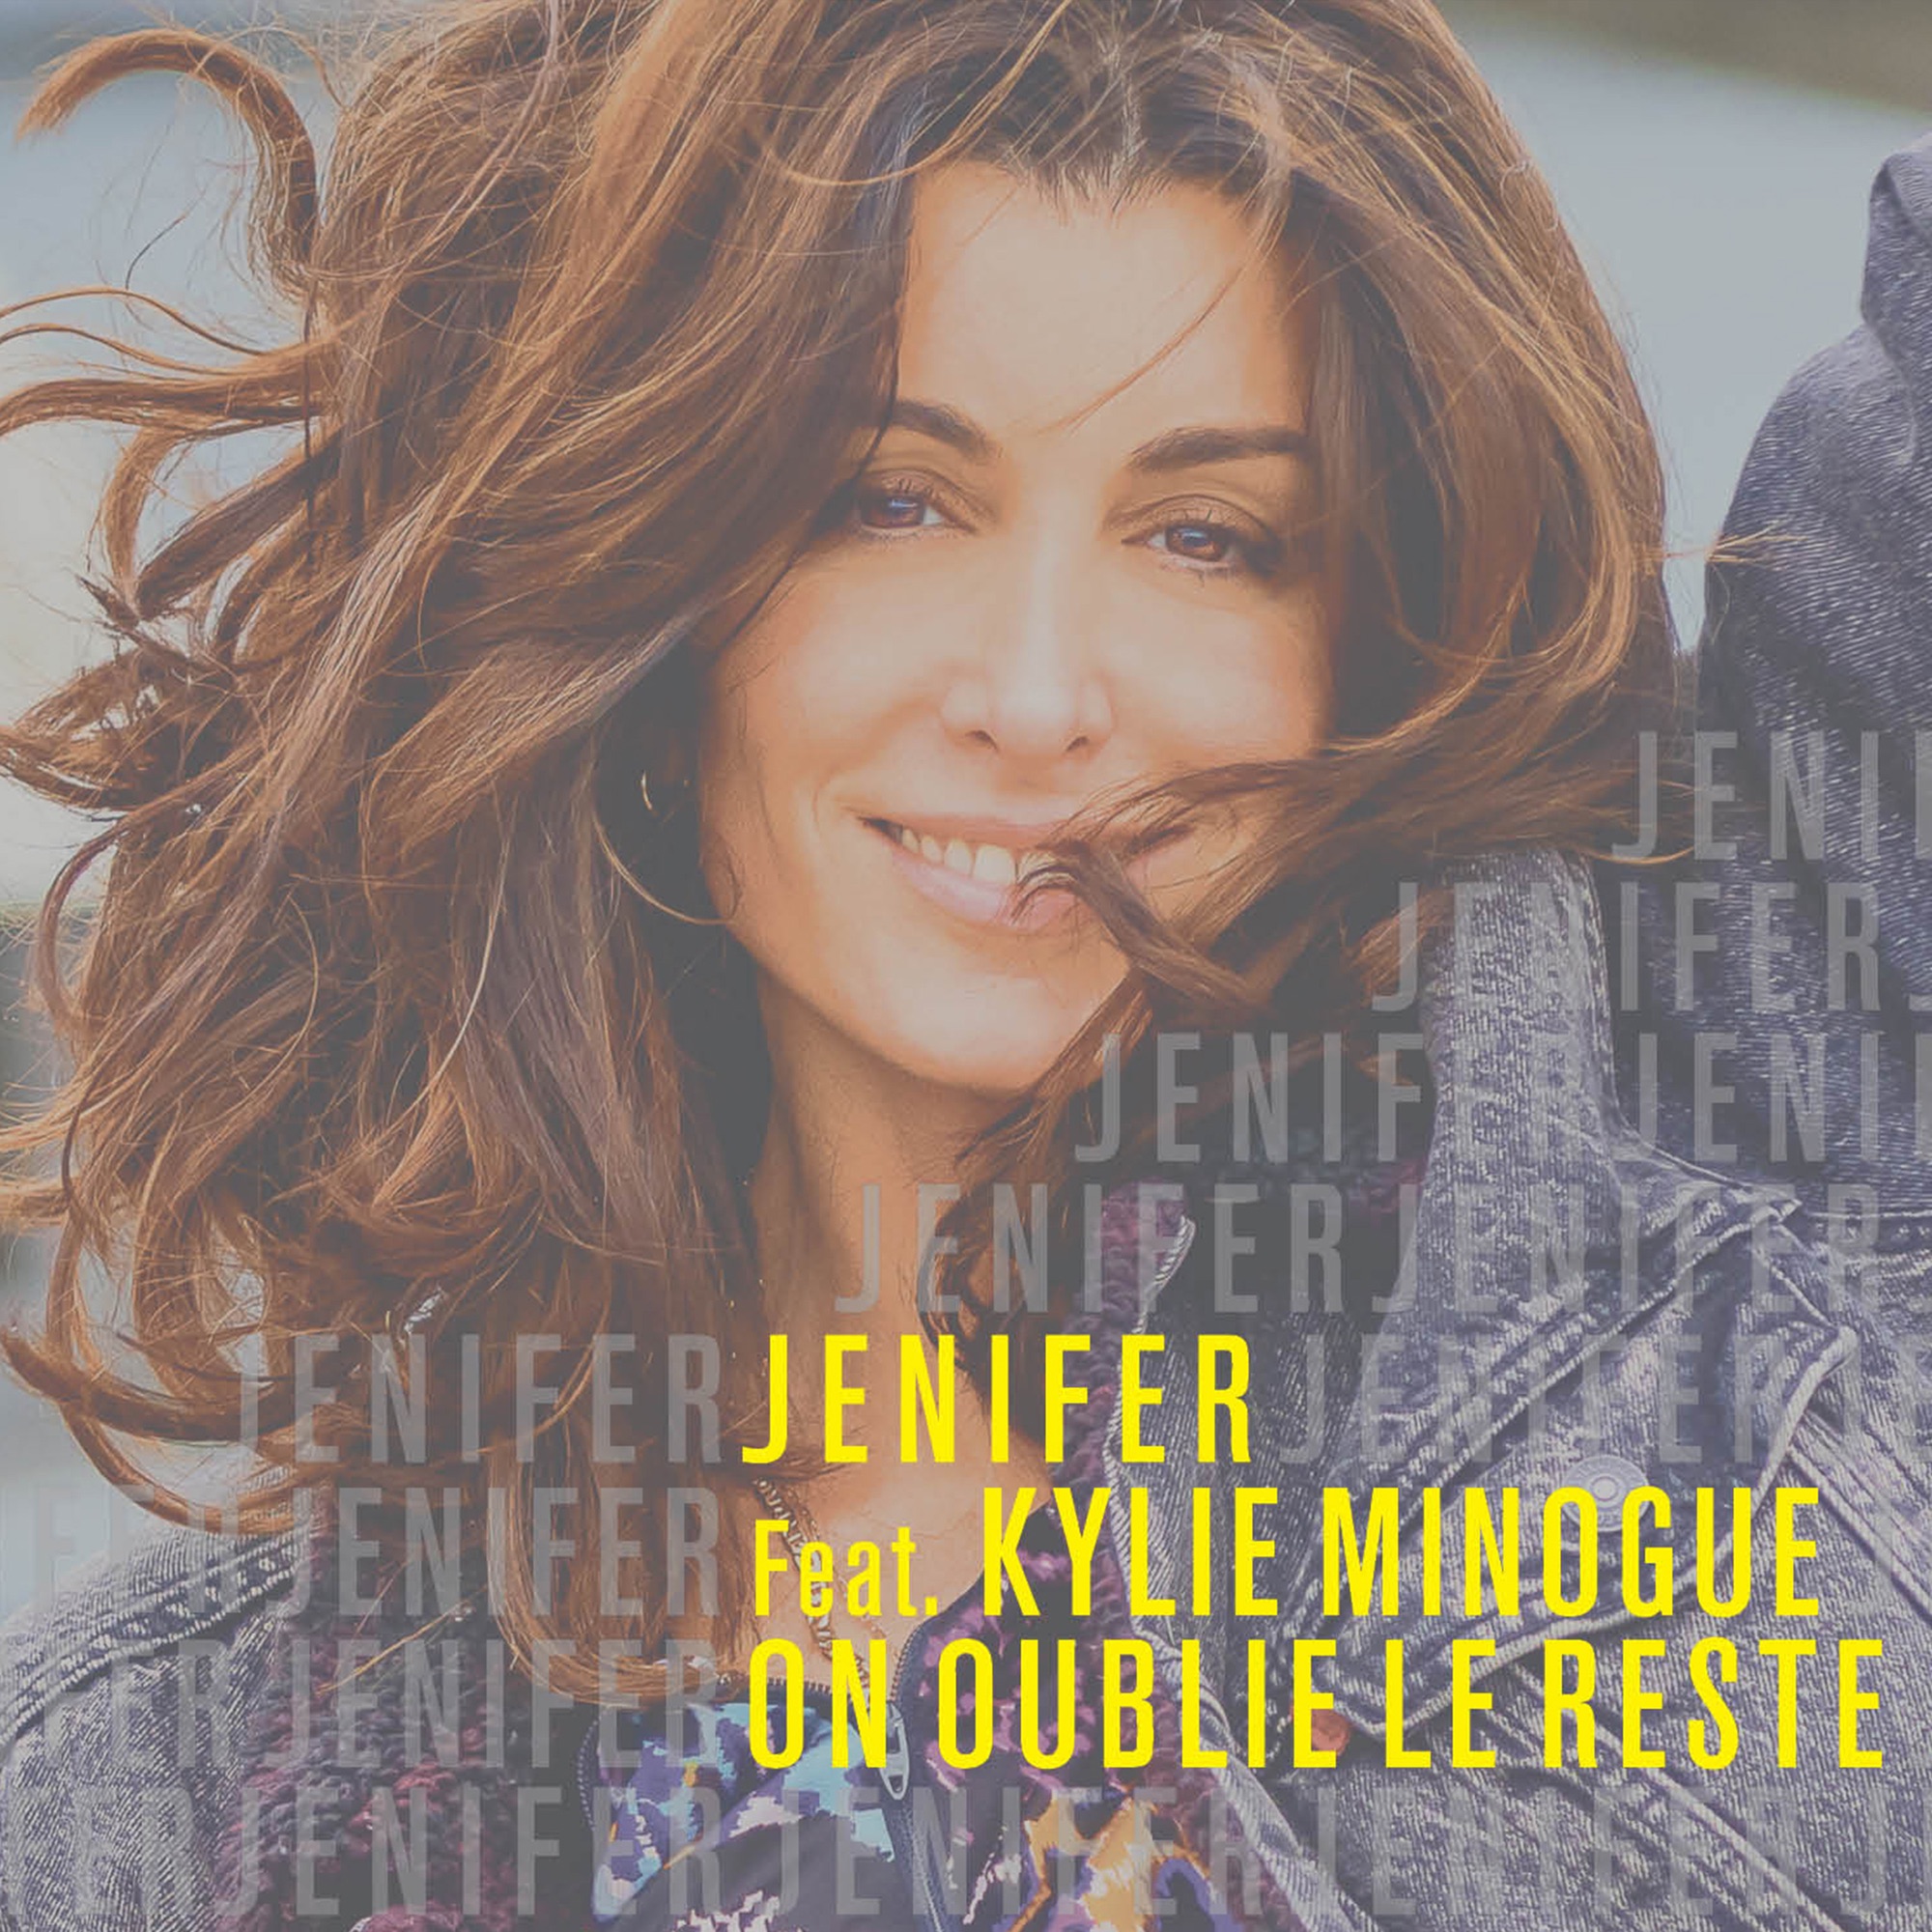 Jenifer ft. featuring Kylie Minogue On oublie le reste cover artwork